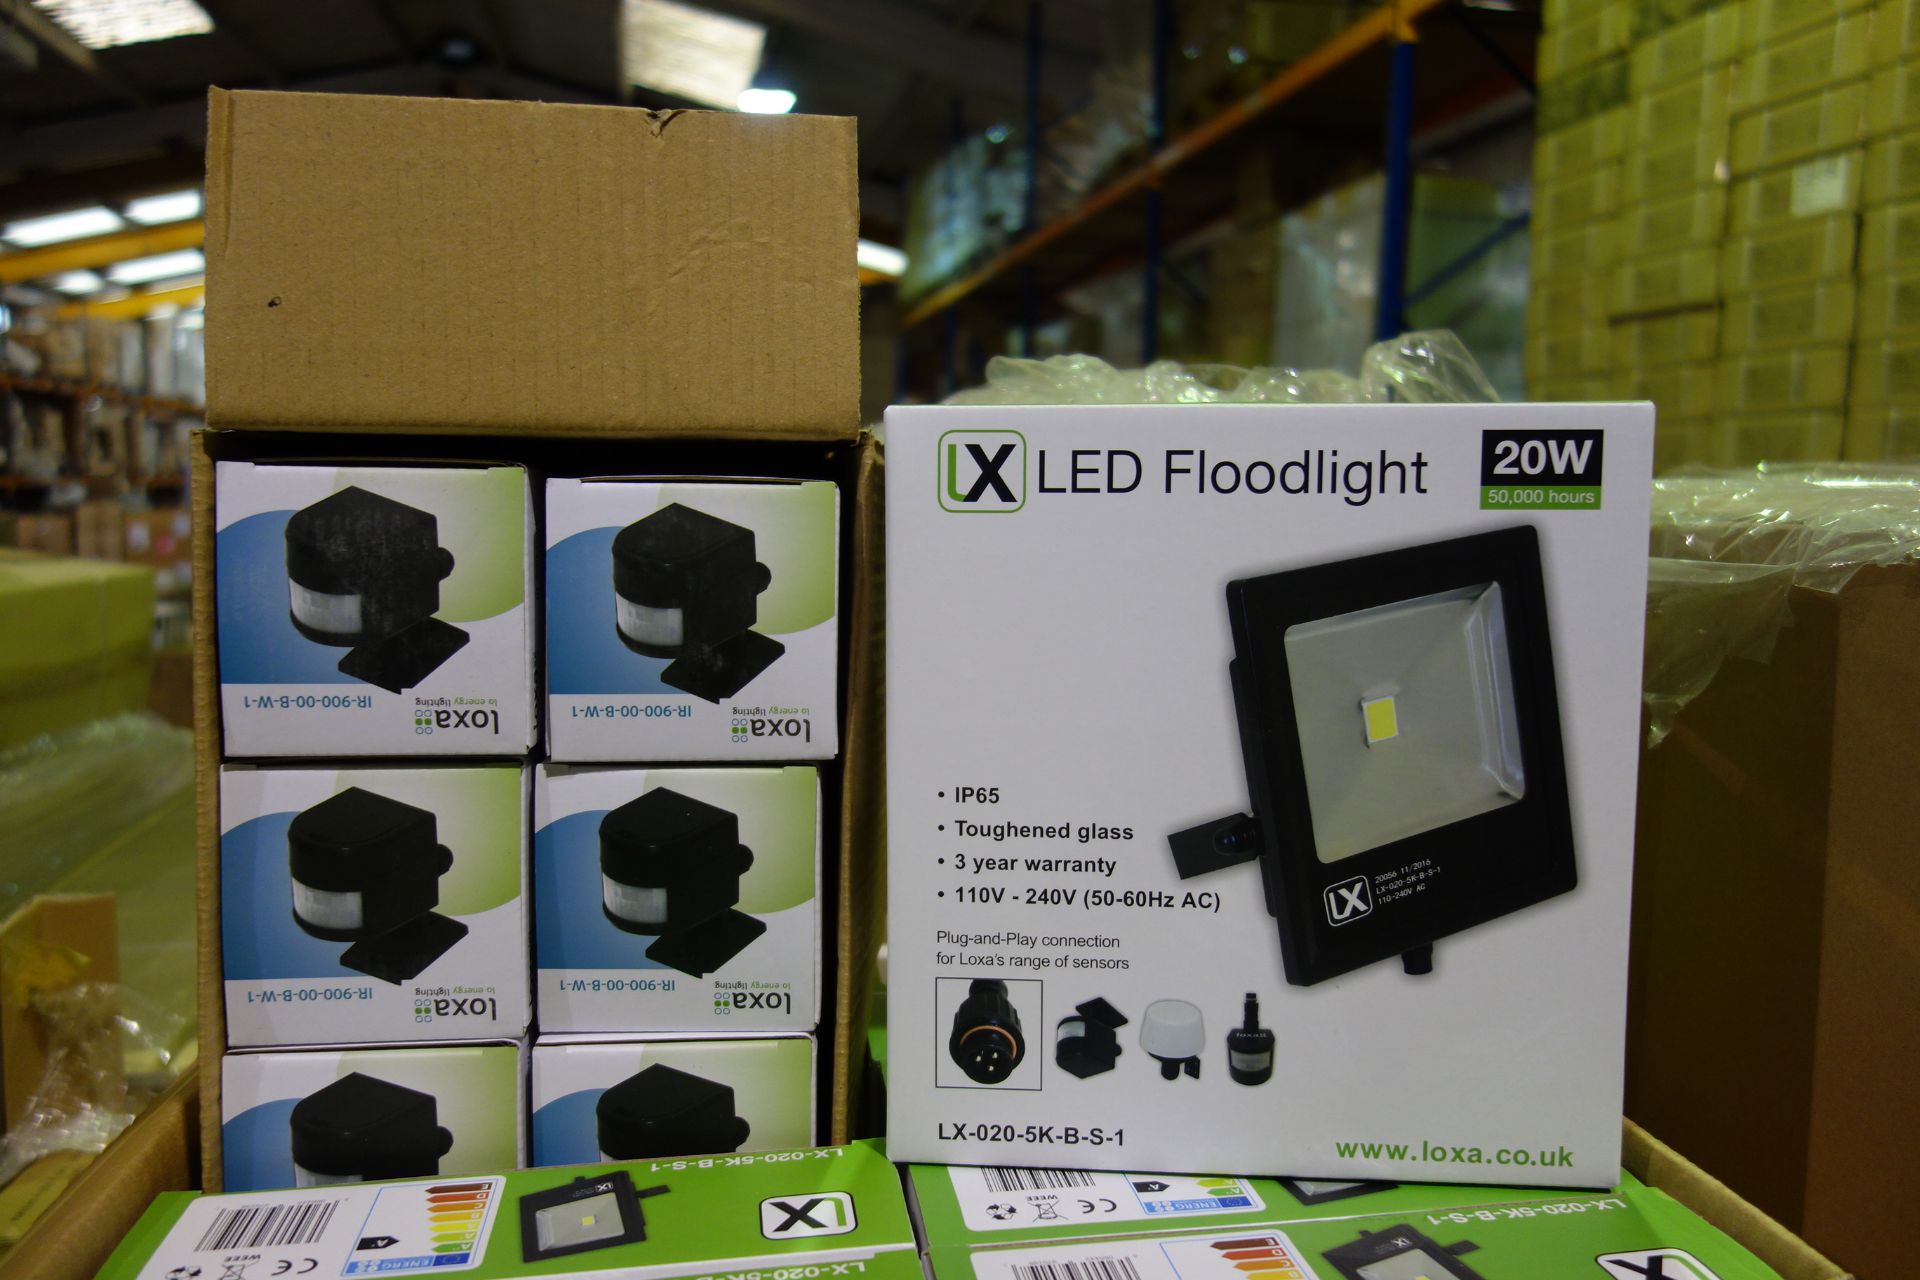 10 X Loxa LX-020-5K-B-S-1 20W LED Floodlights IP65 C/W 10 X PIR Sensors Loxa IR-900-00-B-W-1